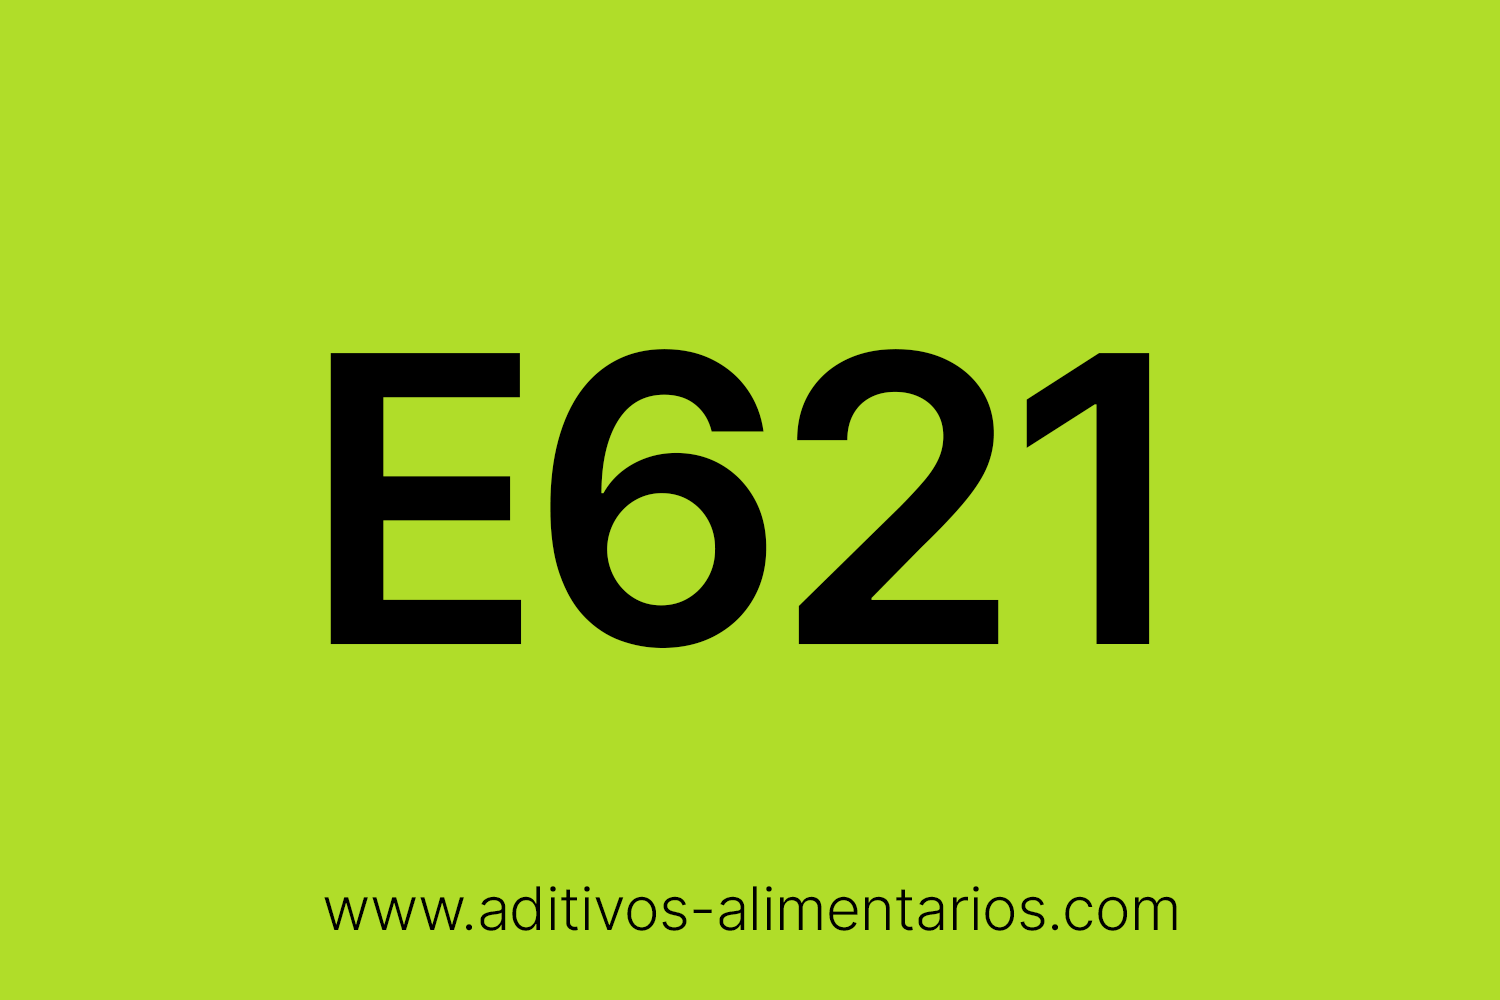 Aditivo Alimentario - E621 - Glutamato Monosódico